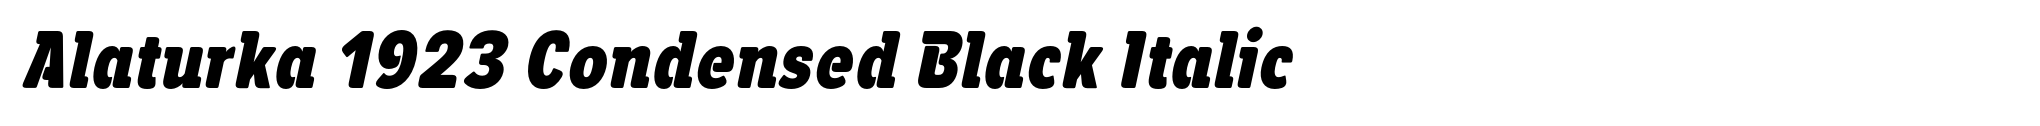 Alaturka 1923 Condensed Black Italic image